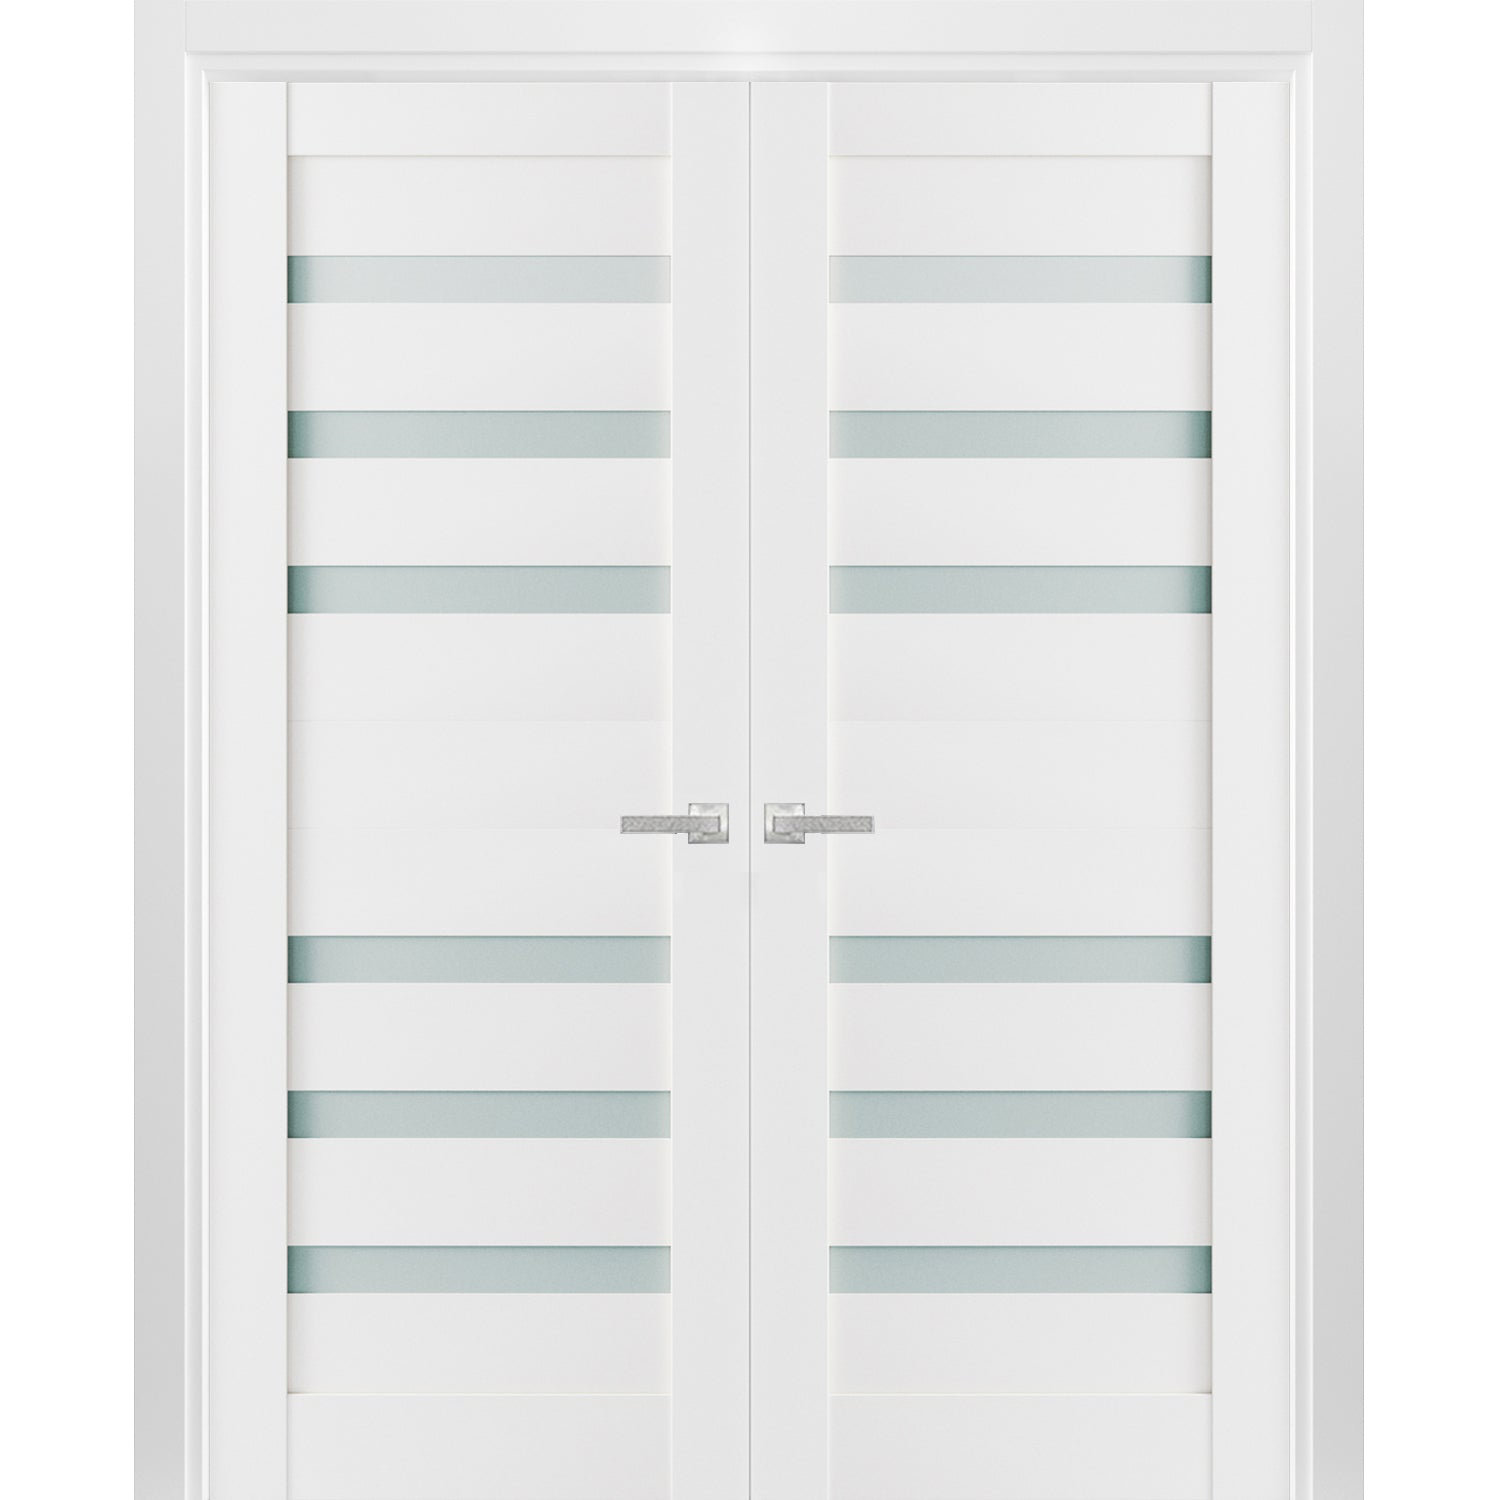 SARTODOORS Quadro Frosted Glass Paneled Wood French White Doors | Wayfair